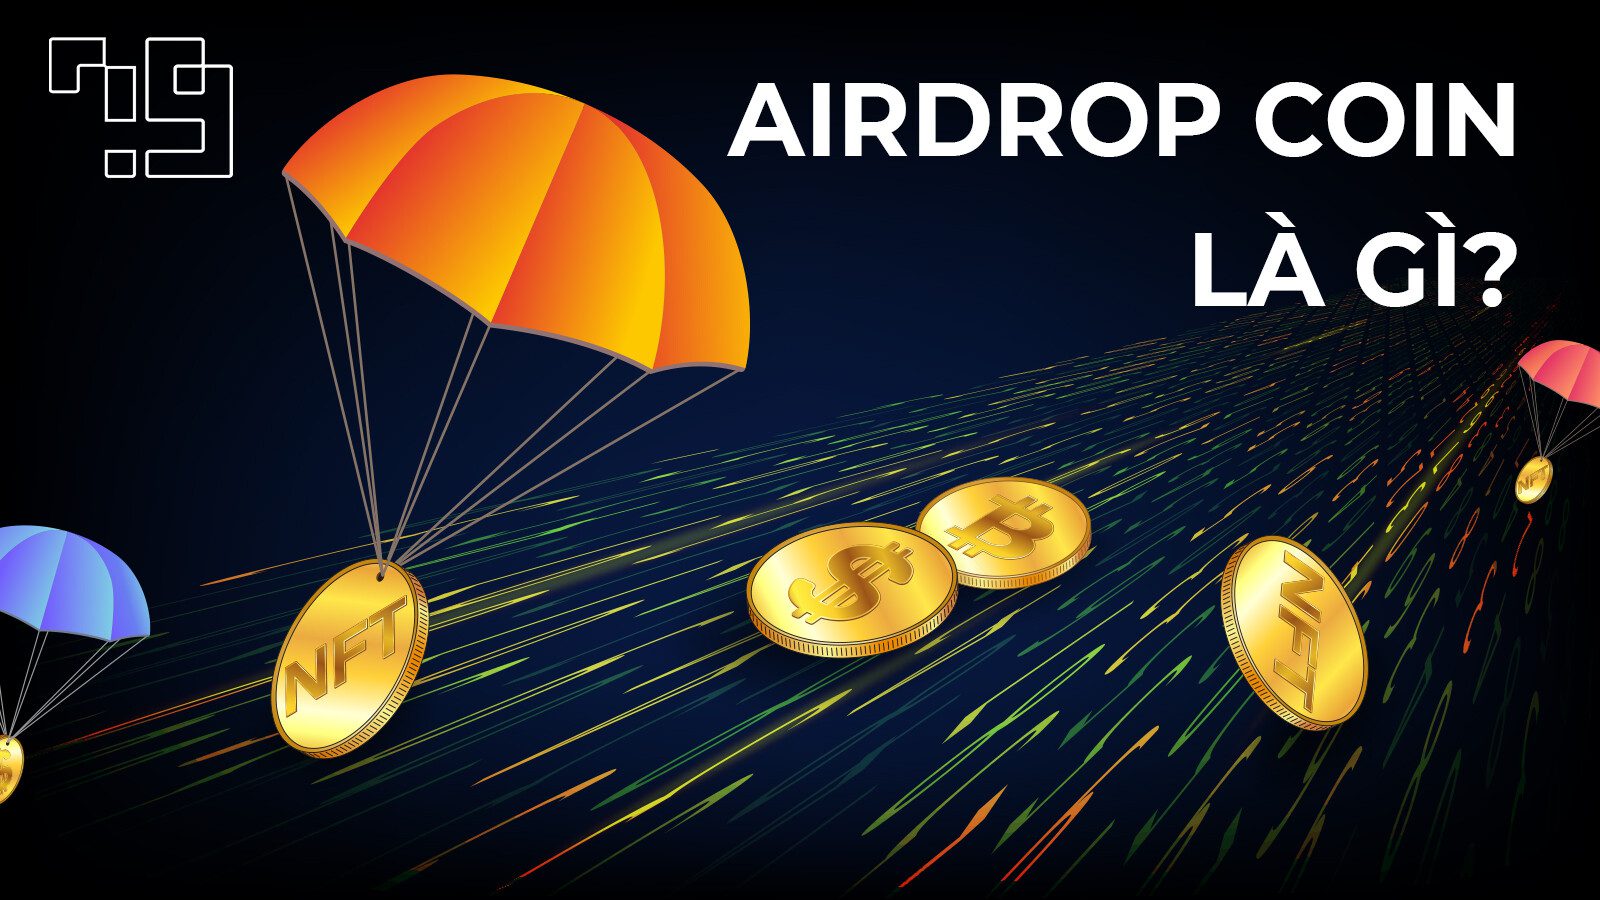 Airdrop Coin là gì? Thông tin cơ bản về Airdrop Coin